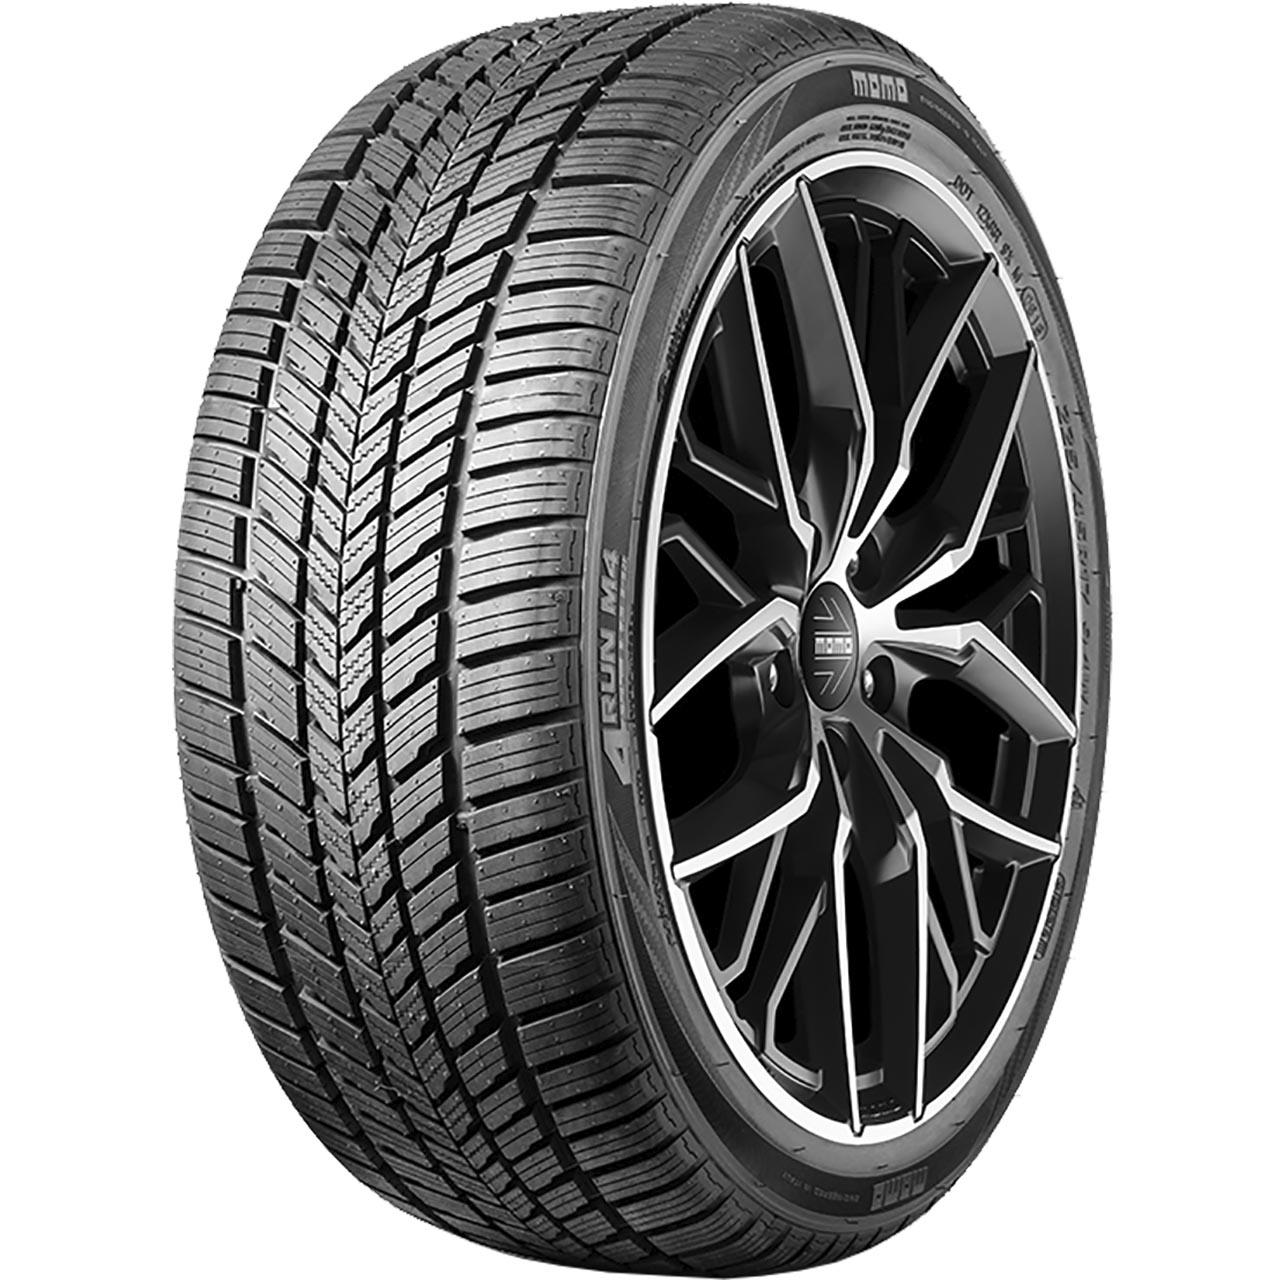 Momo Tire M 4 Four Season 225/45R19 96W XL